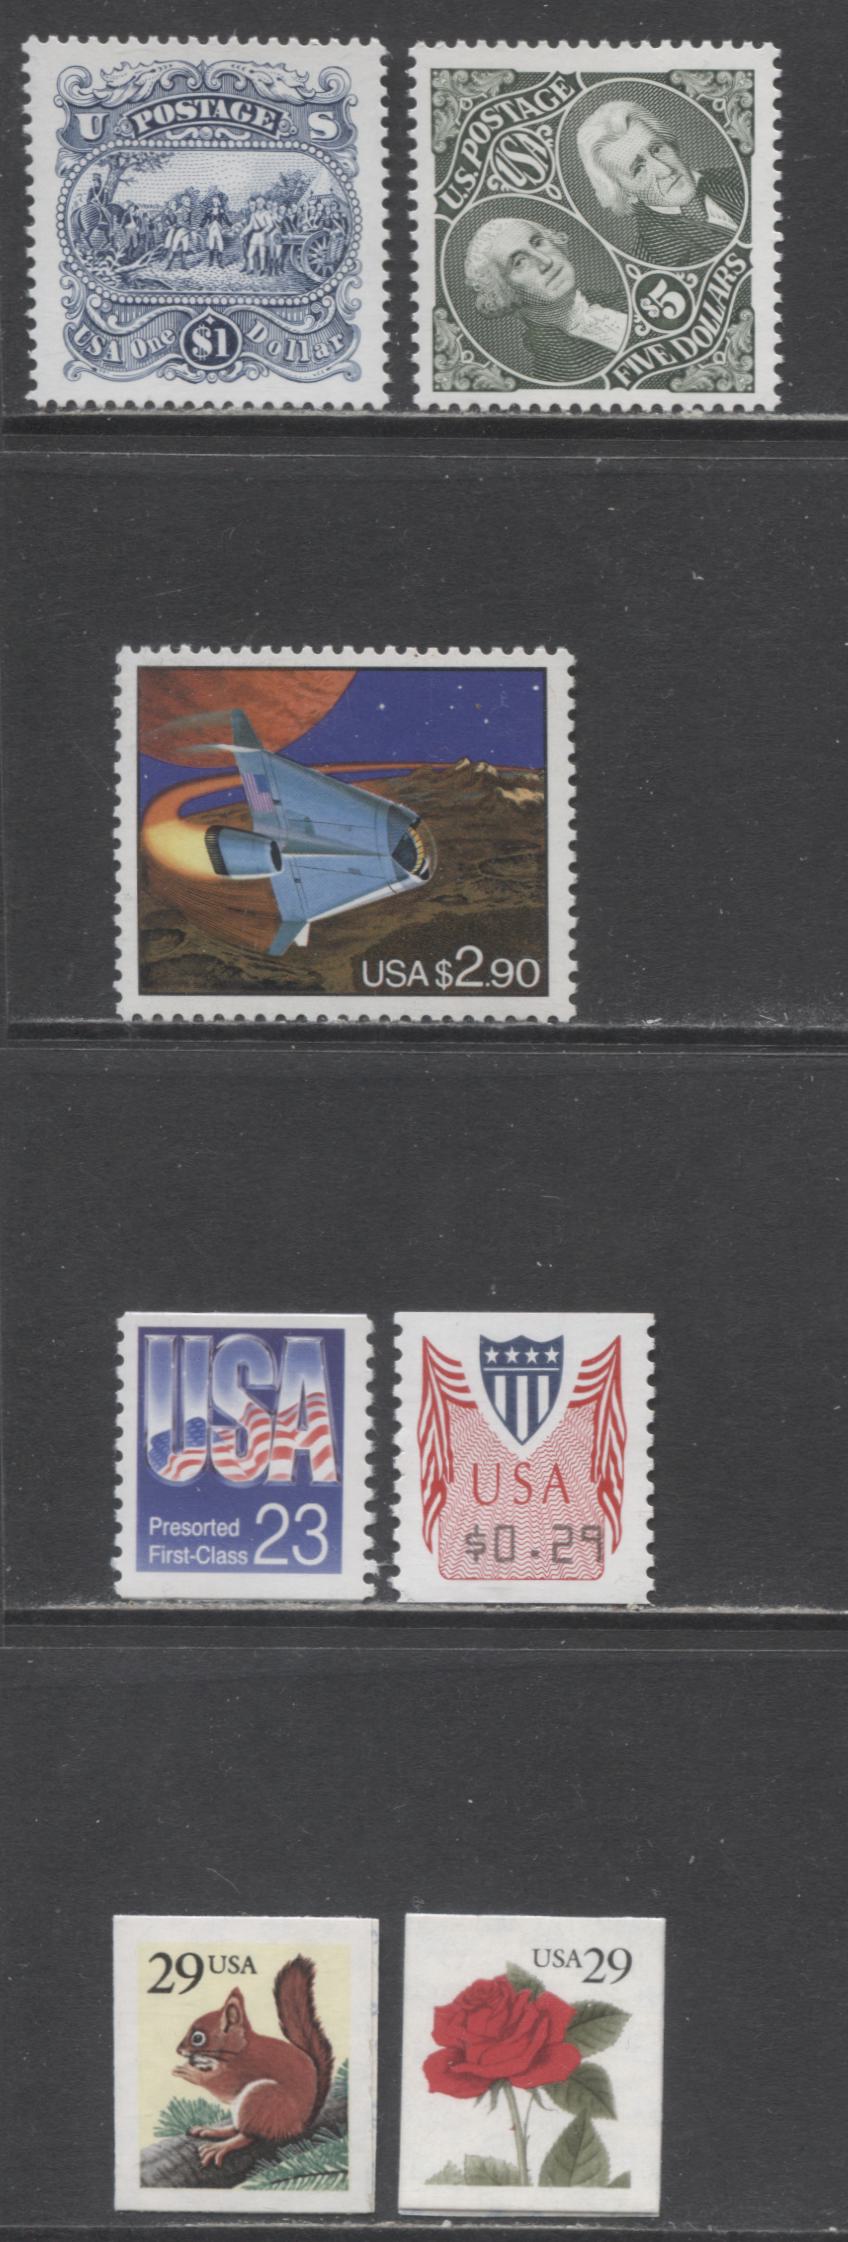 Lot 88 United States SC#2489/CVP32 1993-1995 Futuristic Space Shuttle, Surrender Of Gen. John Burgoyre, Washington/Jackson, Definitives & Computer Vended Postage Issues, 7 VFNH Singles, 2017 Scott Cat. $17.9